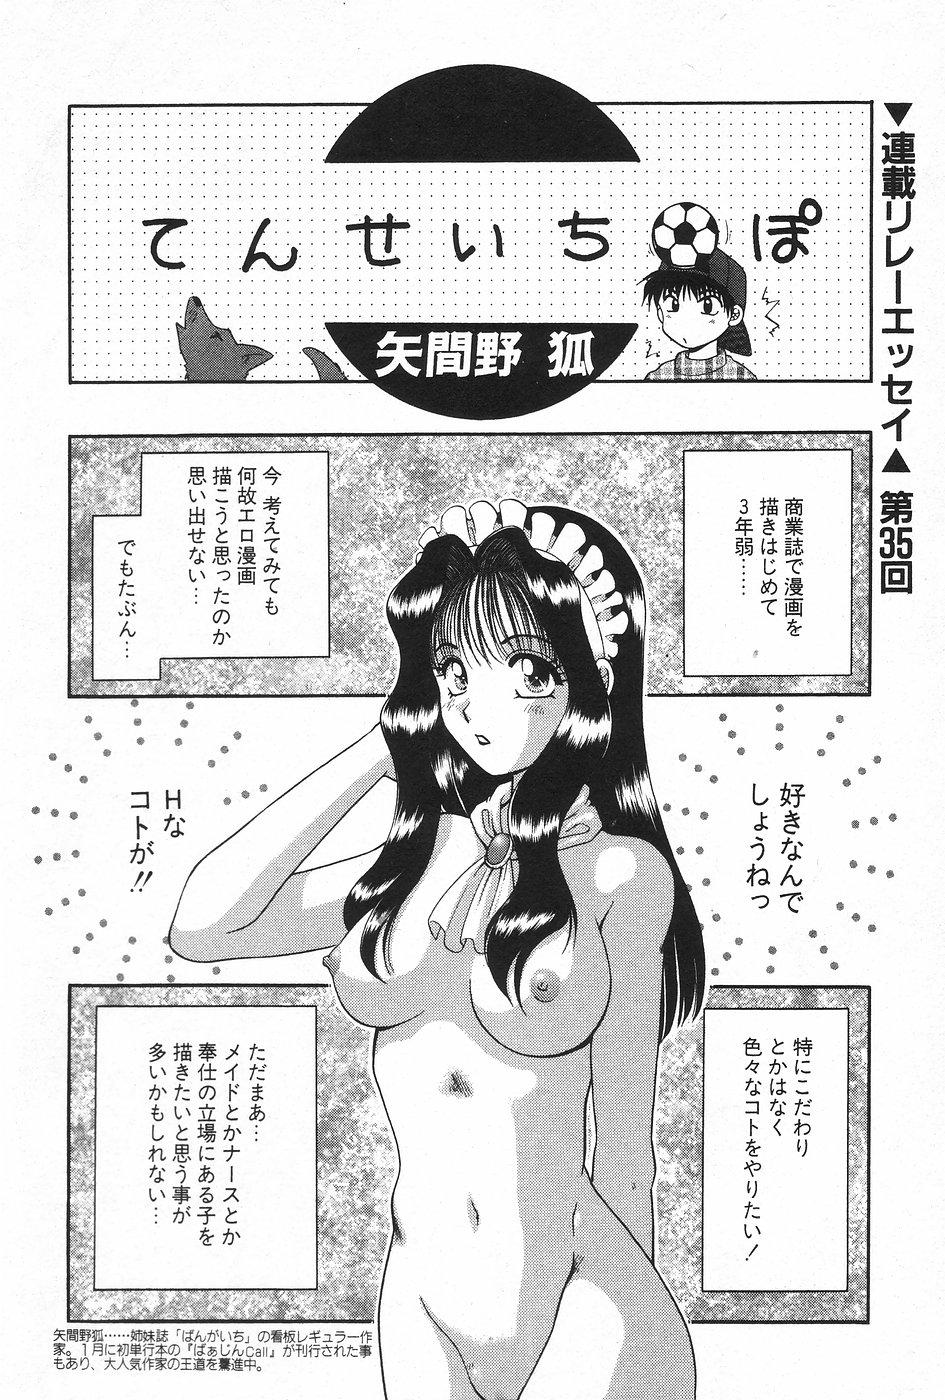 Manga Hotmilk 1997-04 150